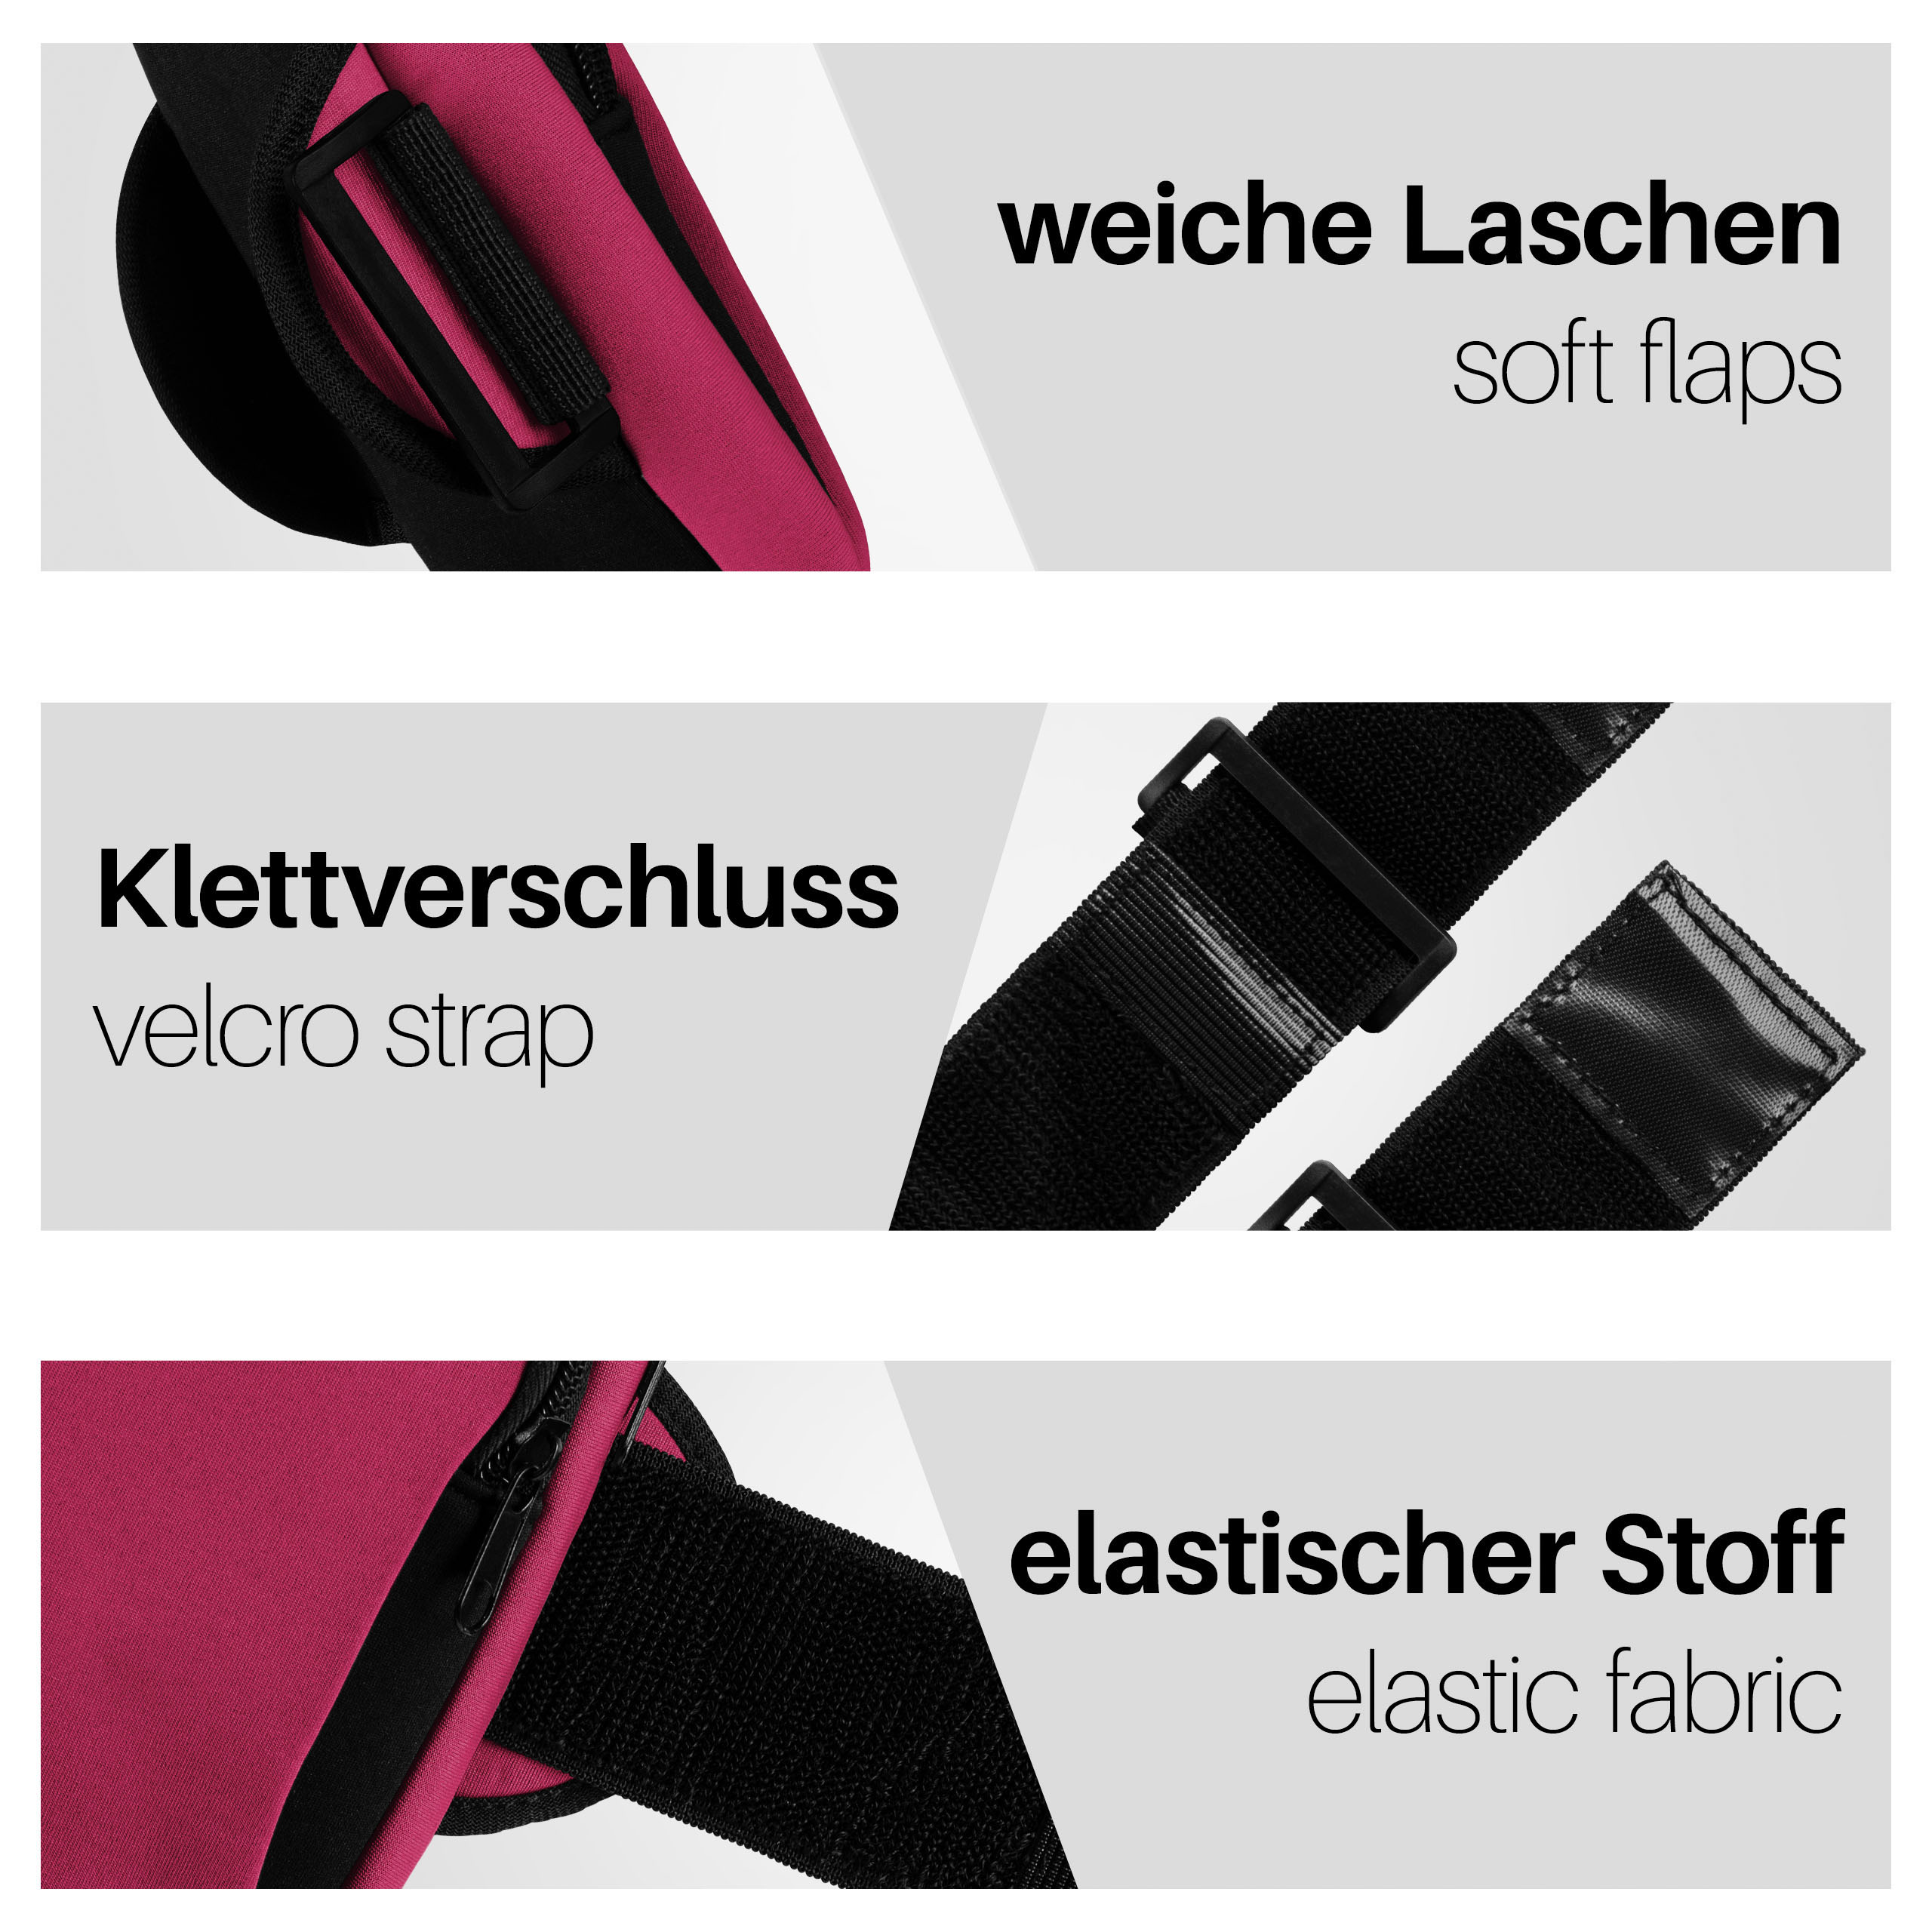 Pink MOEX LG, Full 2, Sport Armband, Stylus Cover,